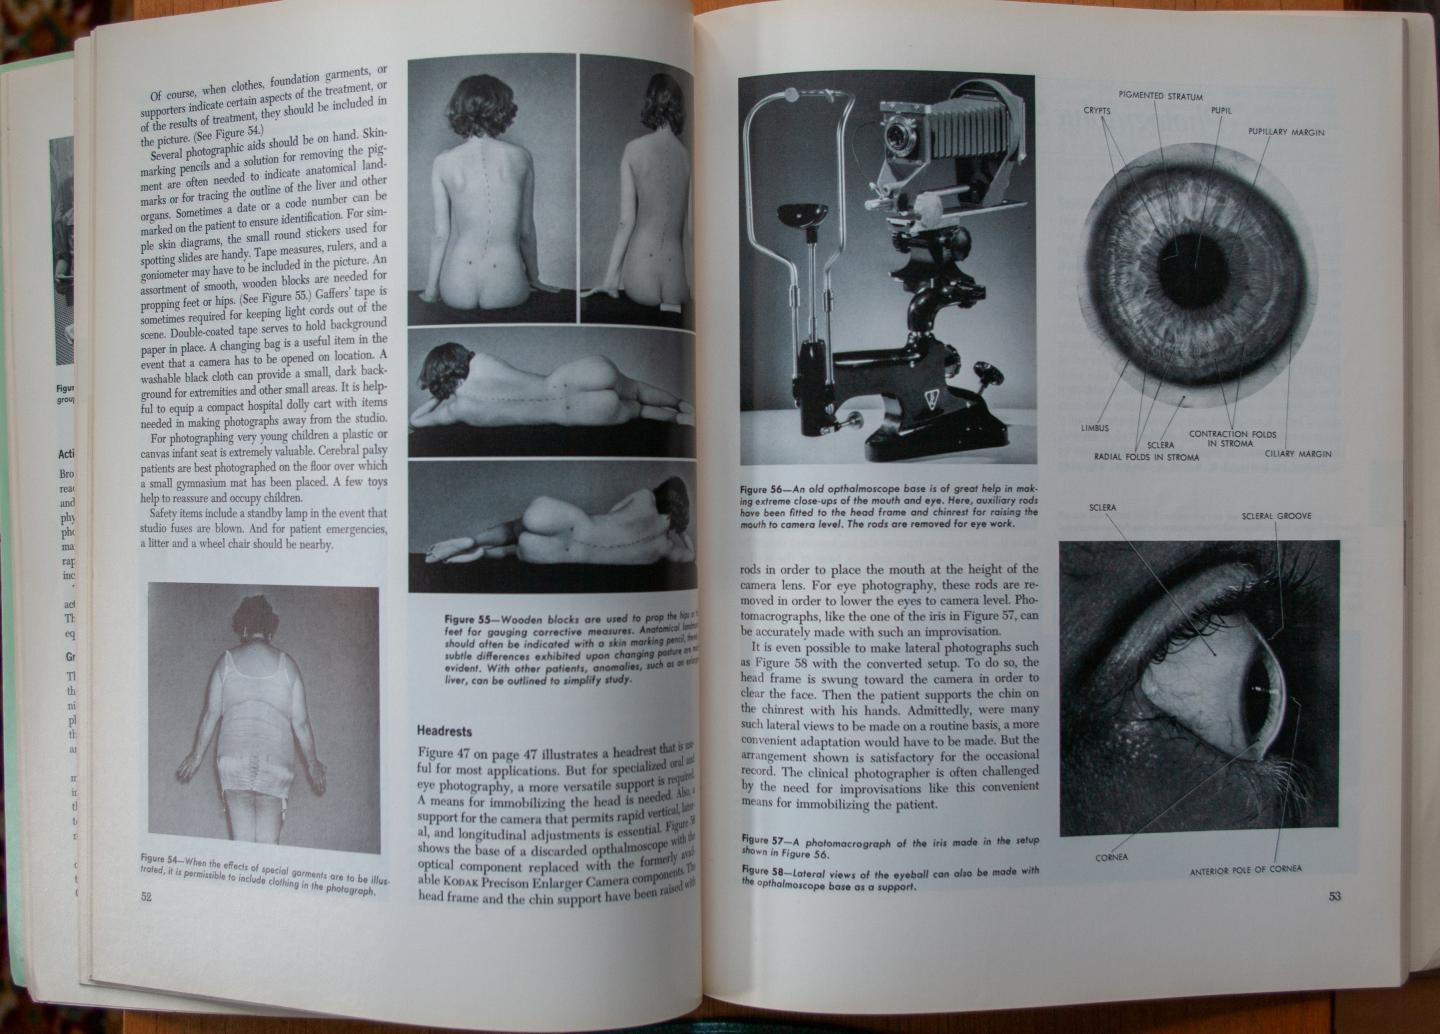 Eastman-Kodak Company - Clinical photography : a Kodak medical publication for professional use only